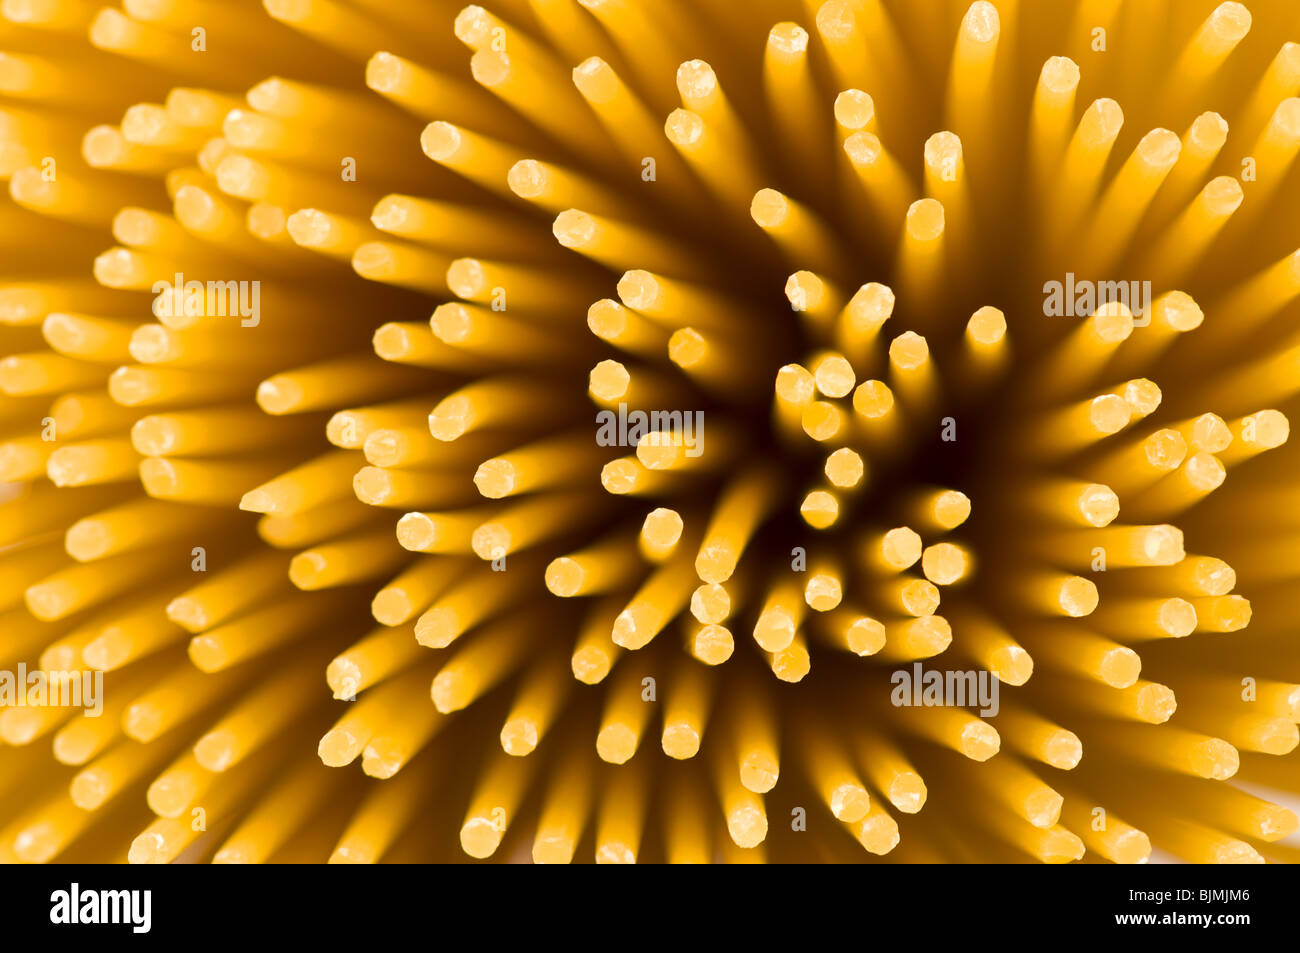 Spaghetti background Stock Photo